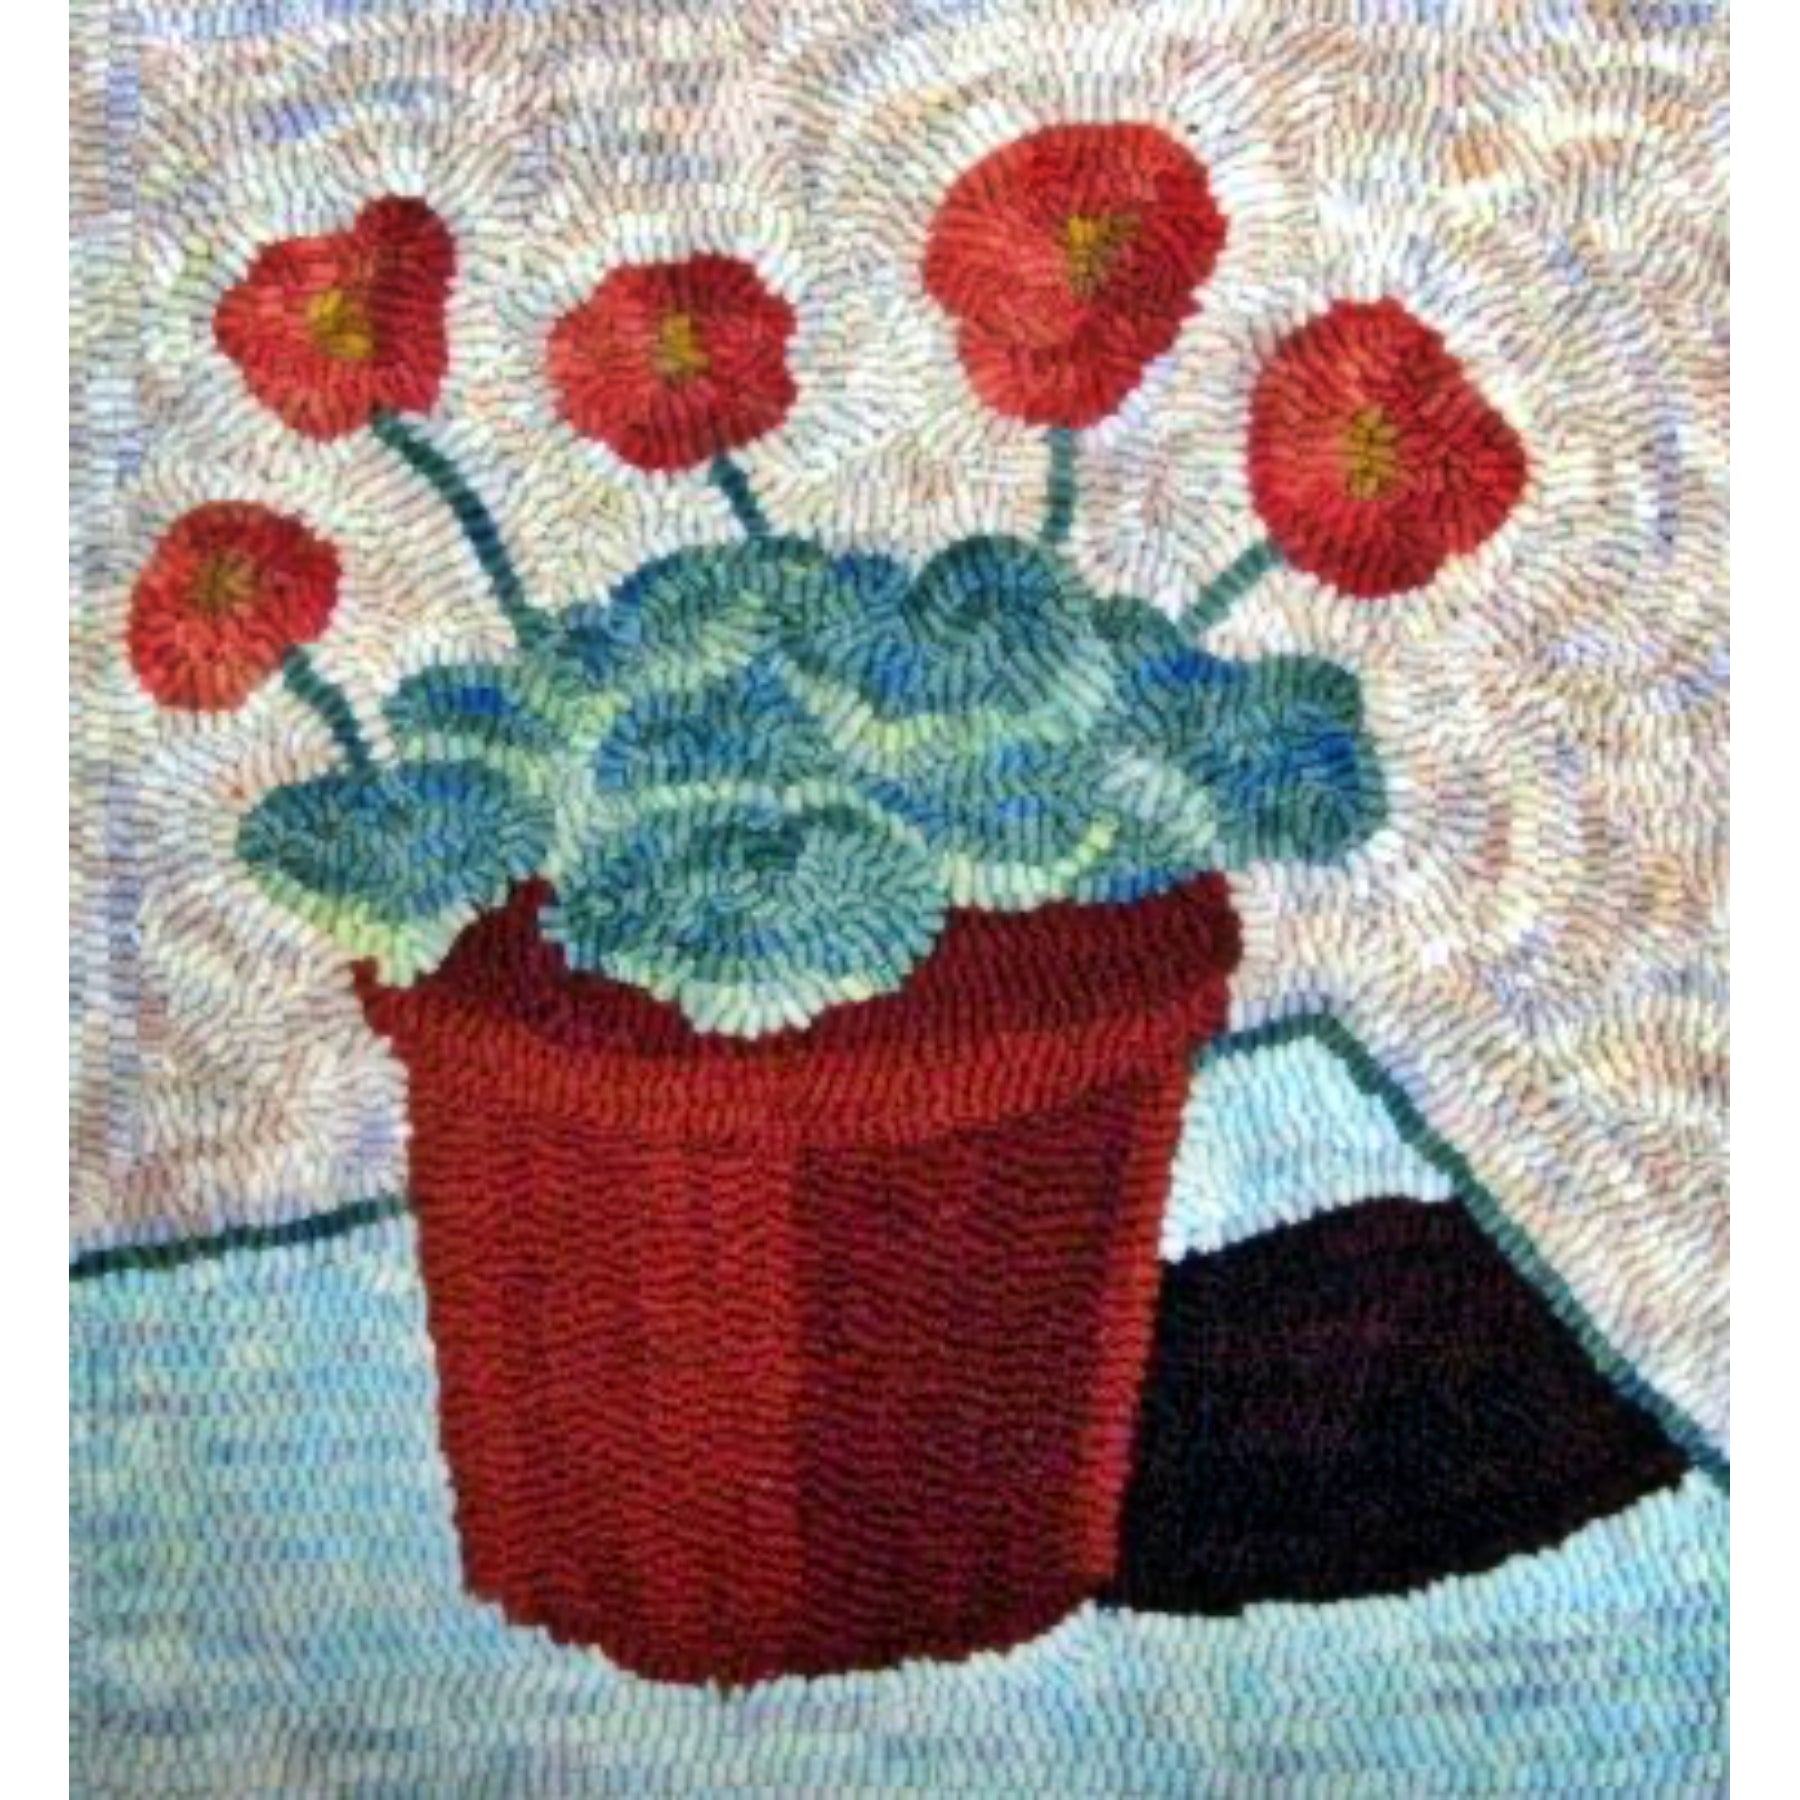 Flower Pot, rug hooked by Karen Maddox